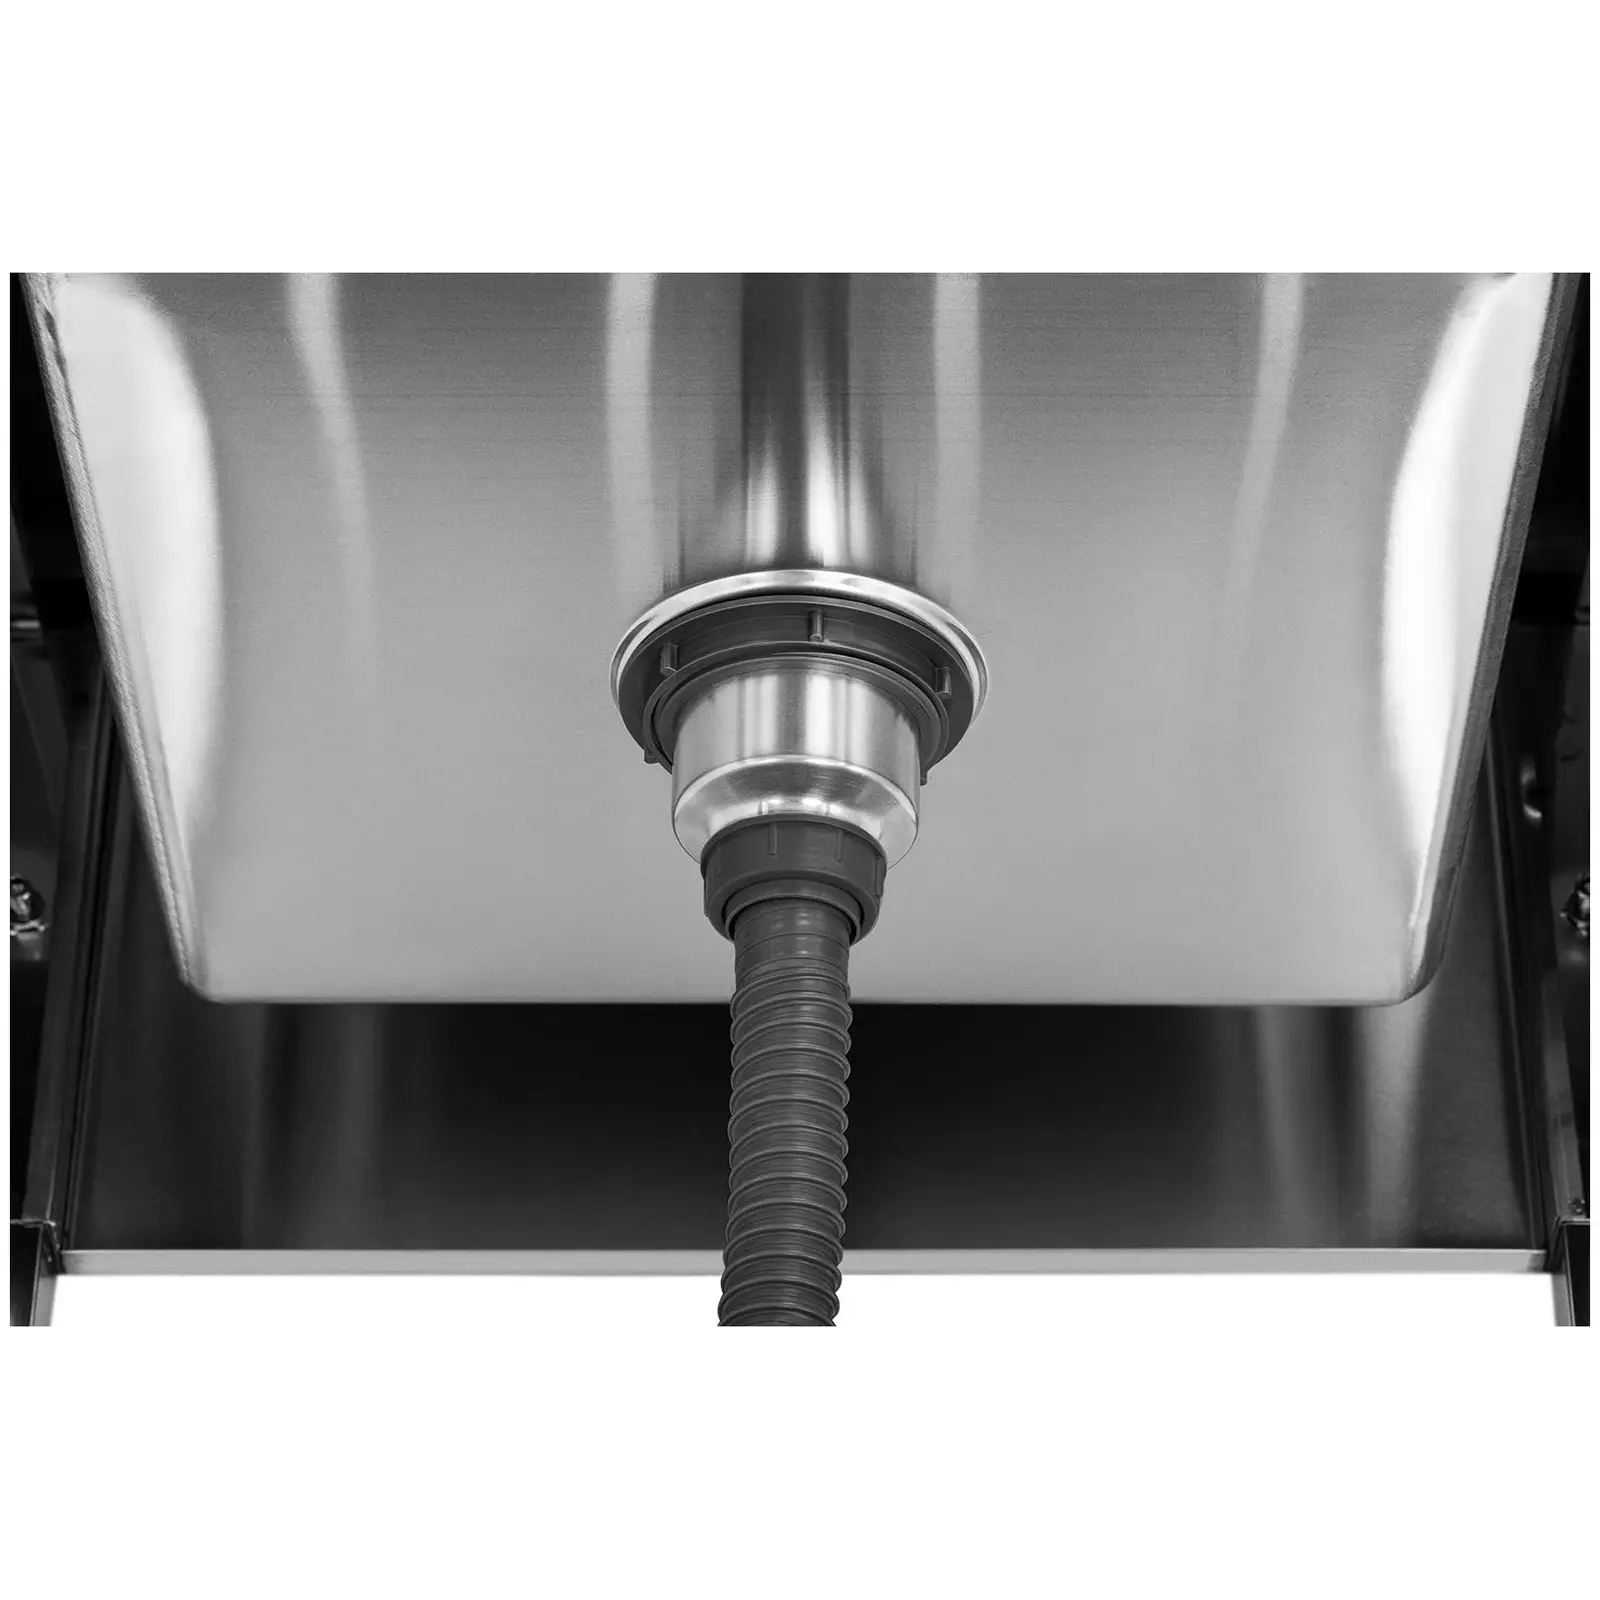 Lavello in acciaio inox per cucina professionale a una vasca - Acciaio inox - 40 x 40 x 25,5 cm